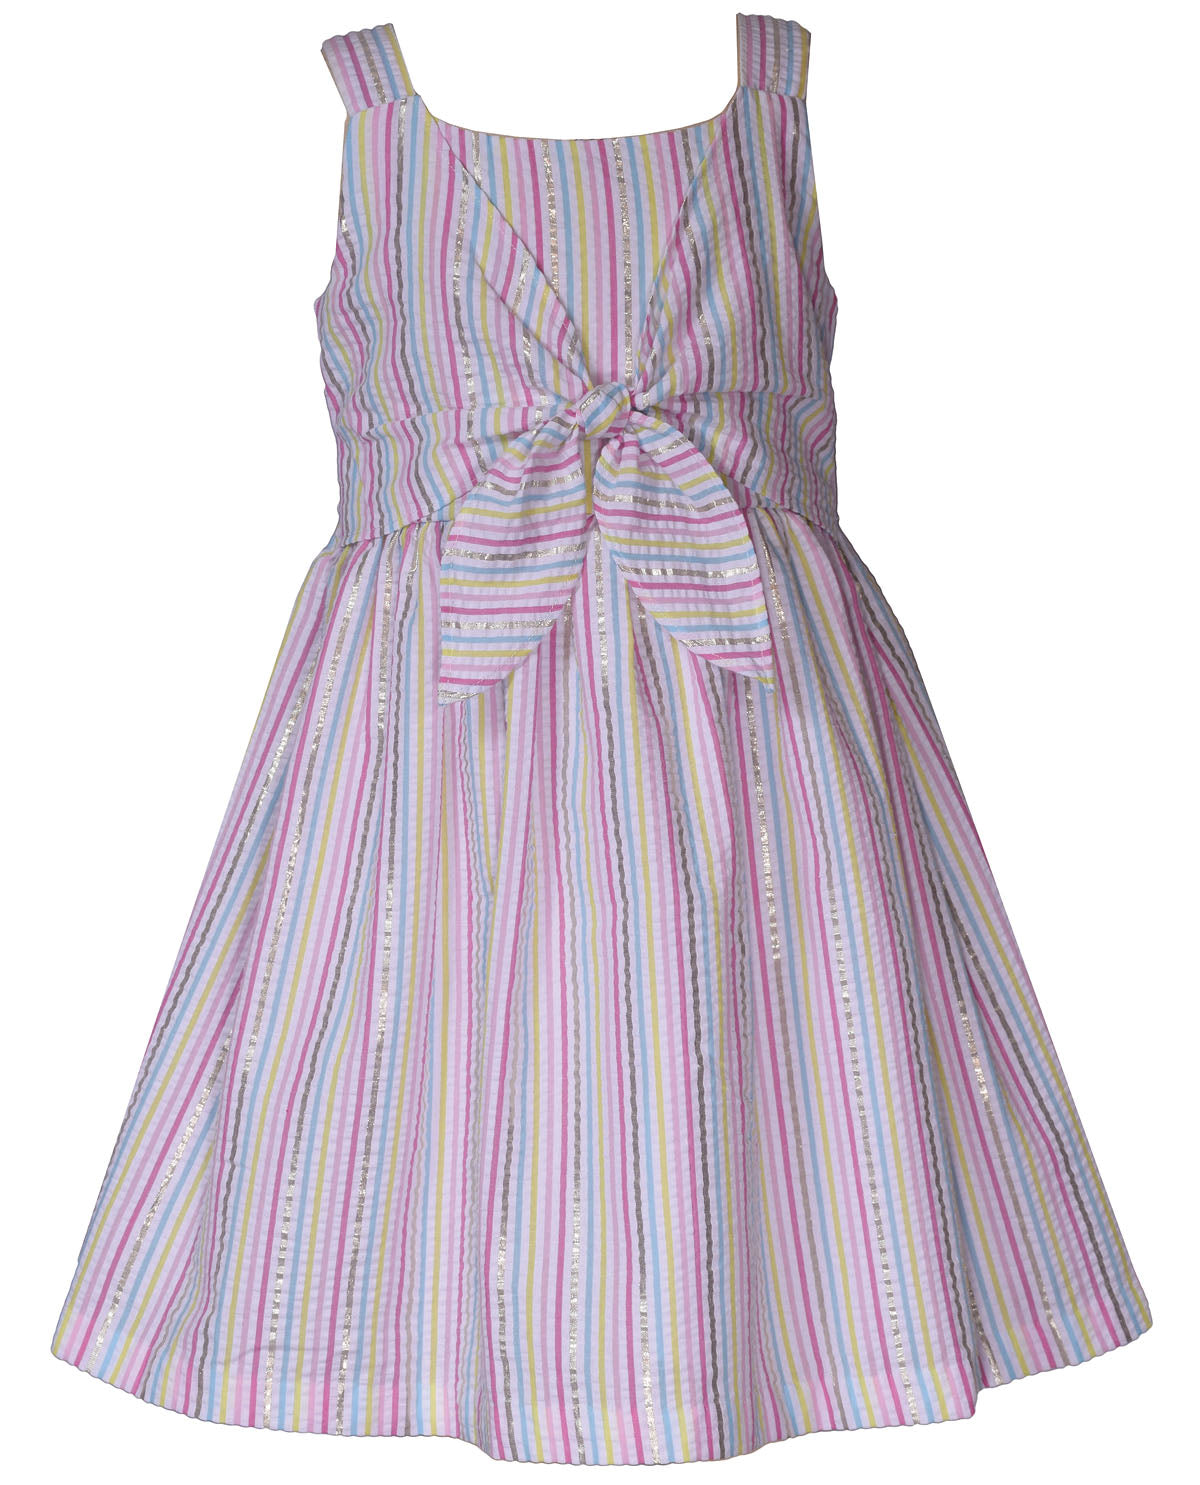 Bonnie Jean 4-6X Stripe Seersucker Crossover Dress